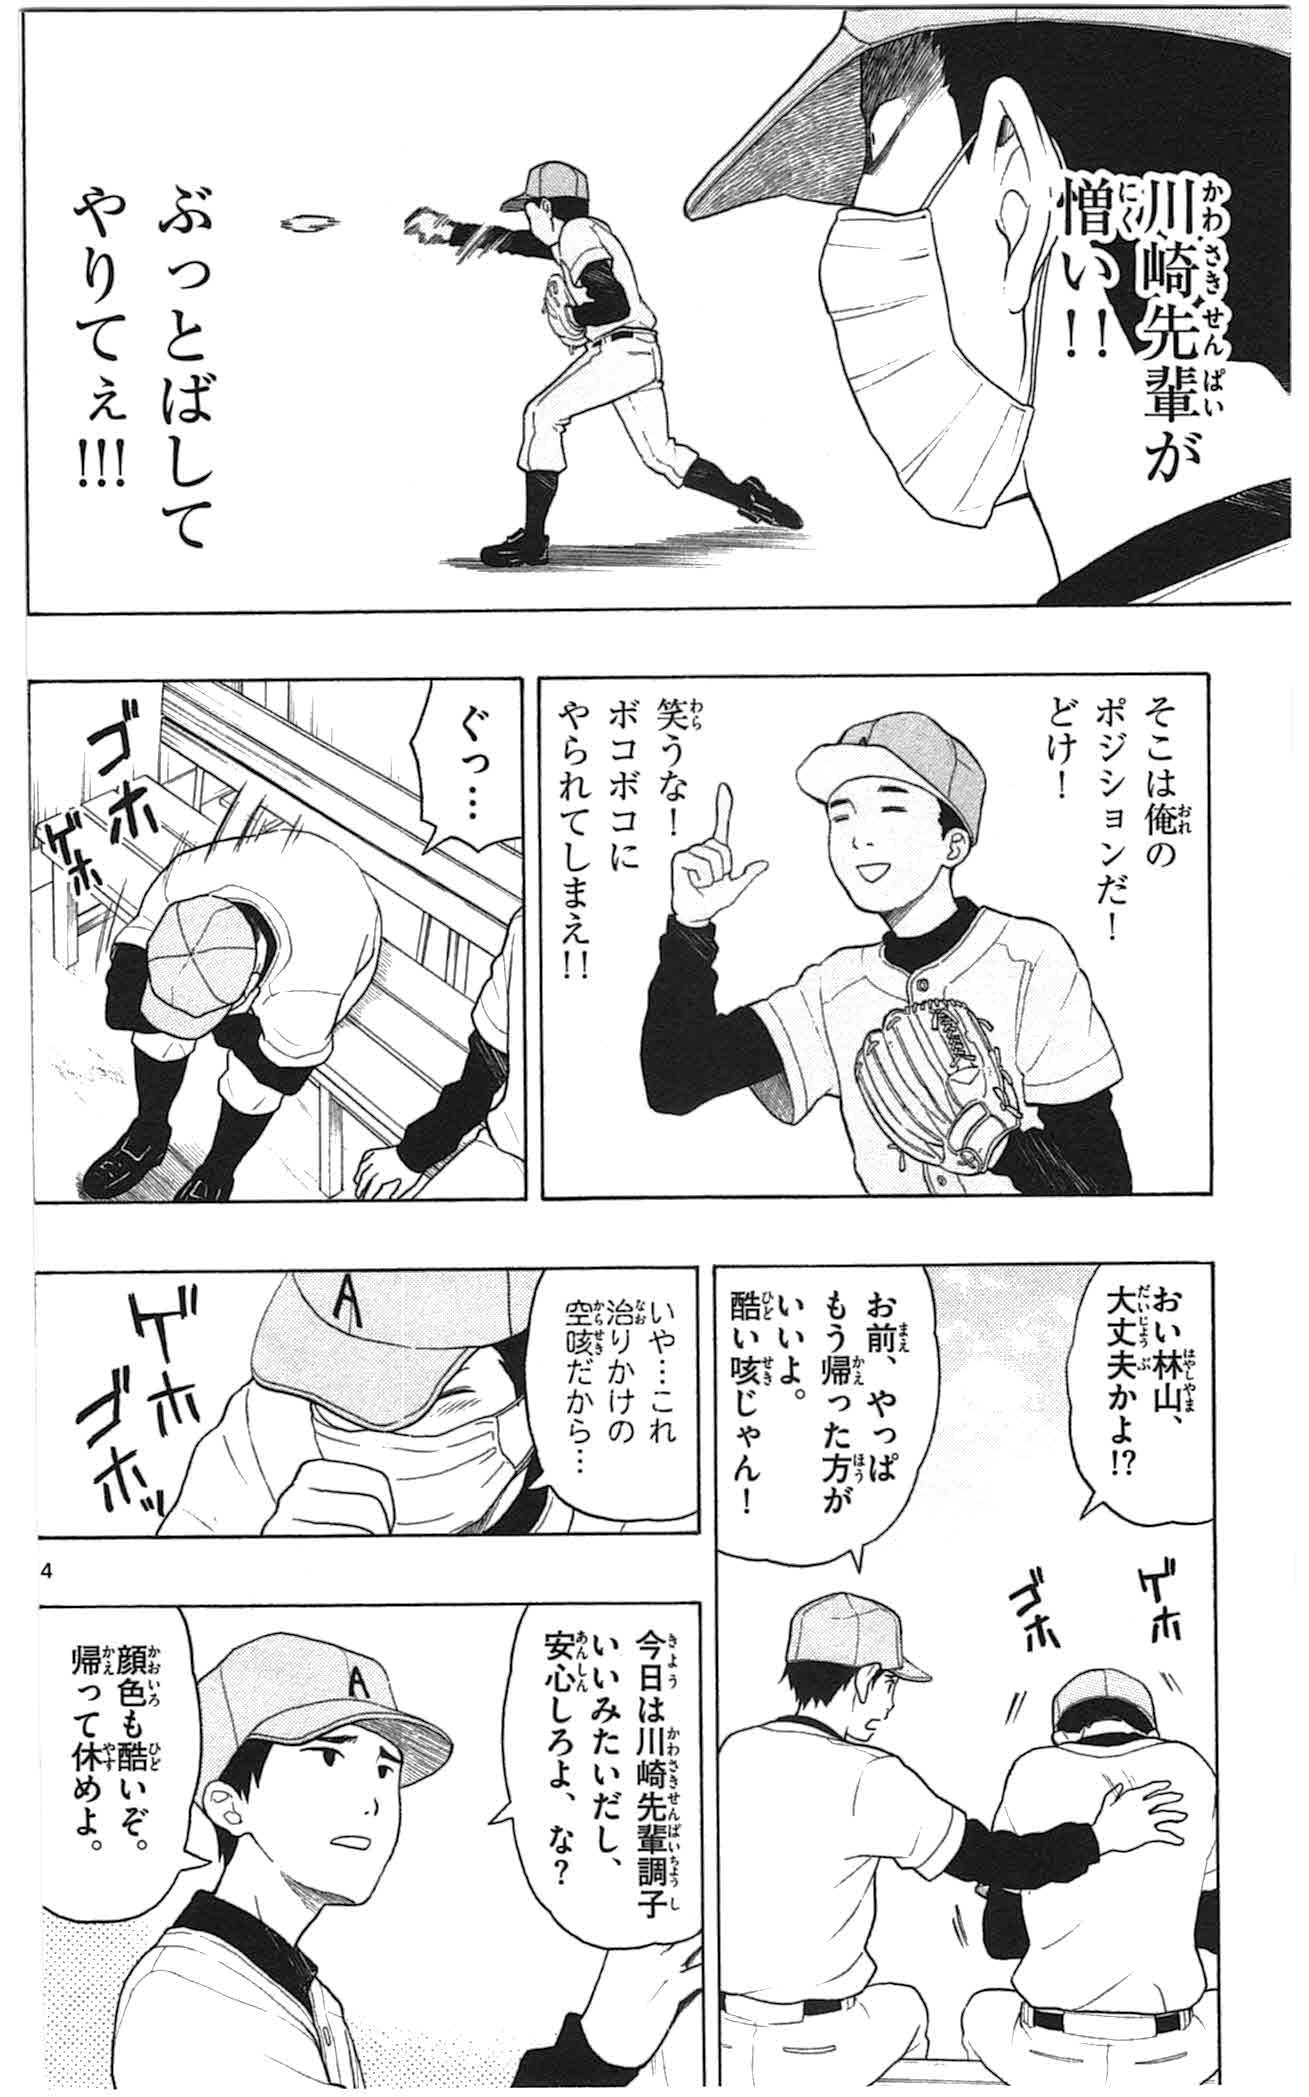 Yugami-kun ni wa Tomodachi ga Inai - Chapter 004 - Page 4